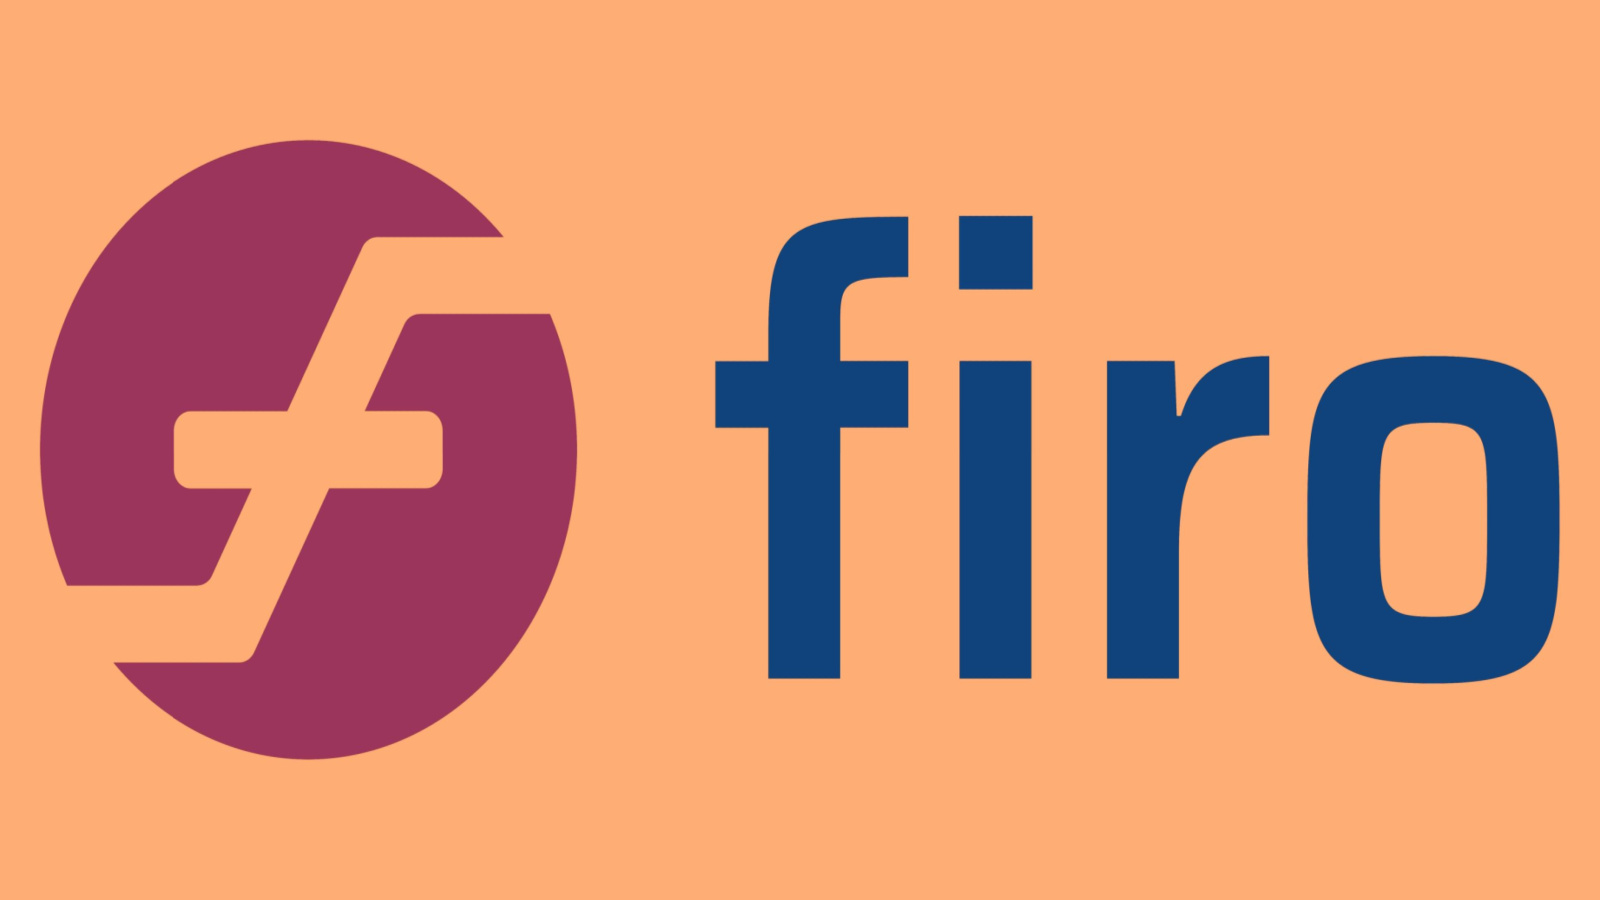 Firo (FIRO-USD) The crypto logo on an orange background representing price predictions.